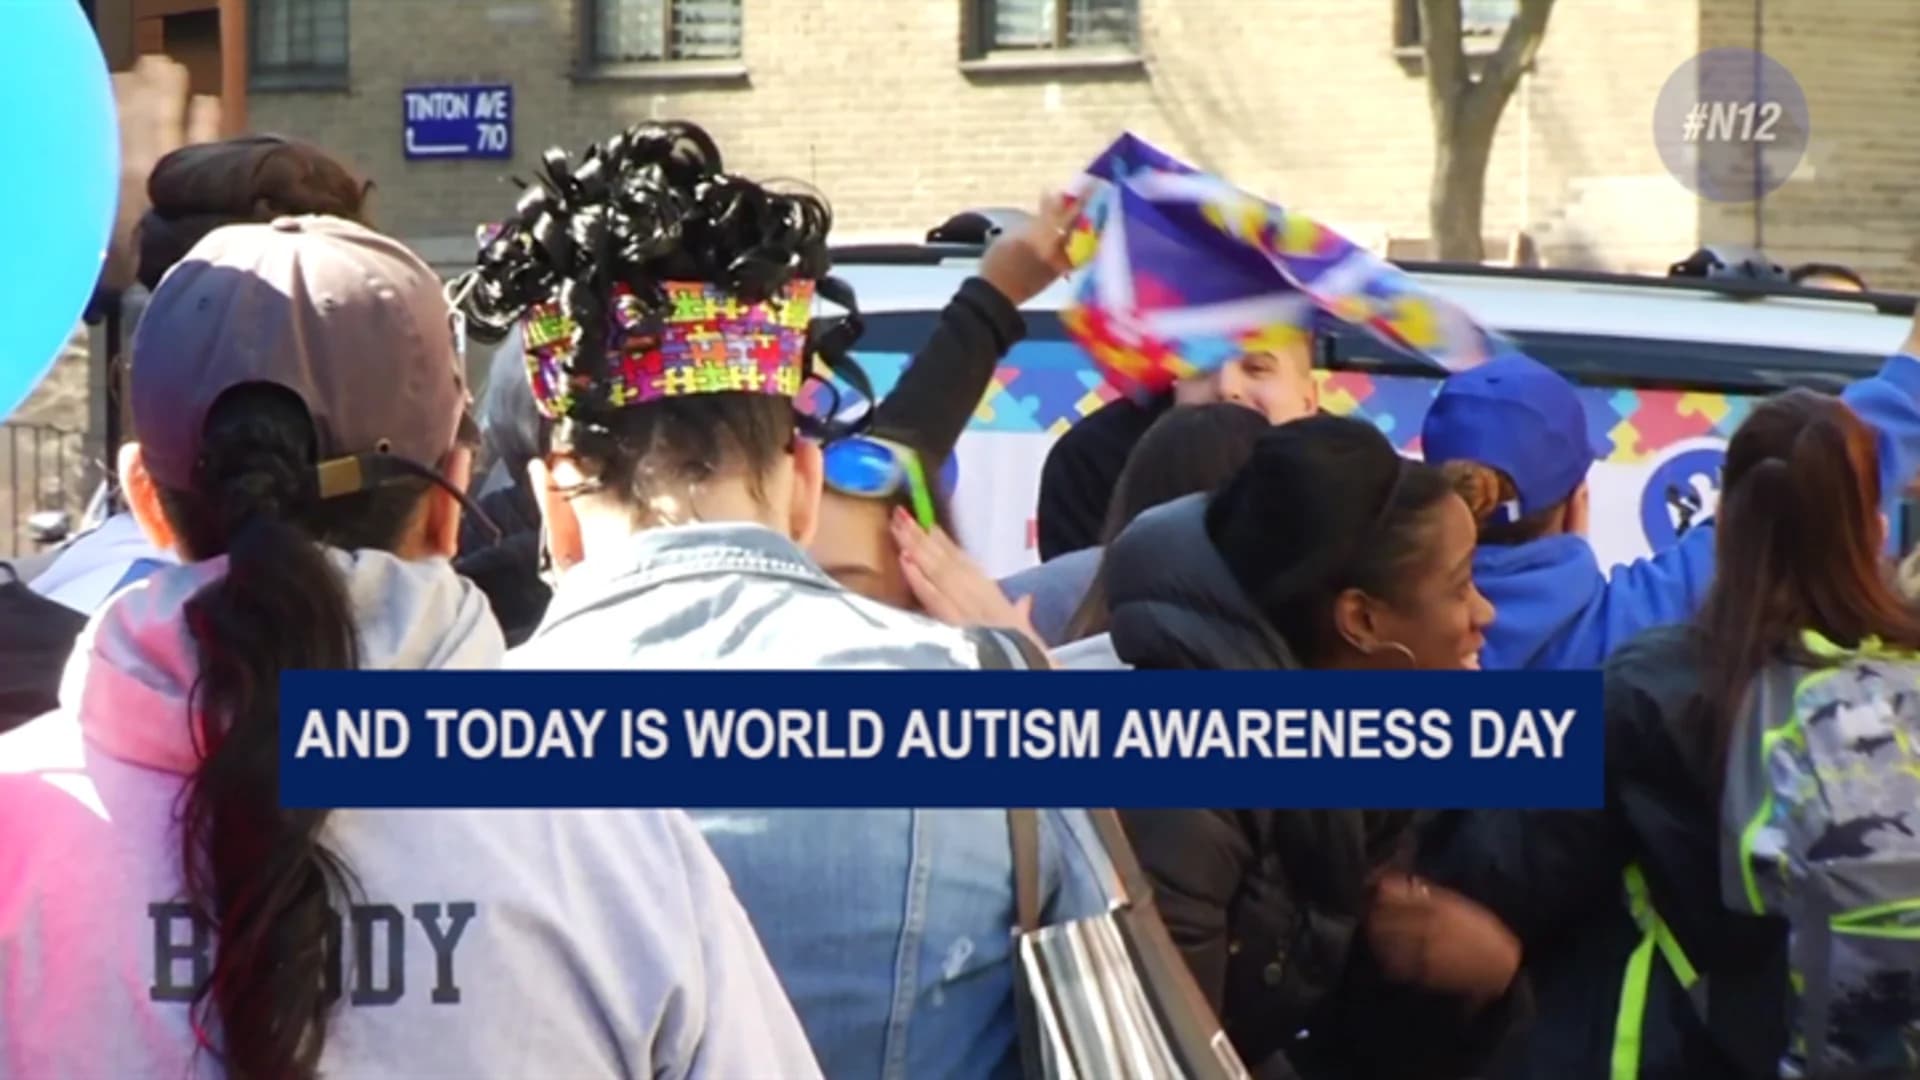 #N12BK: World Autism Awareness Day